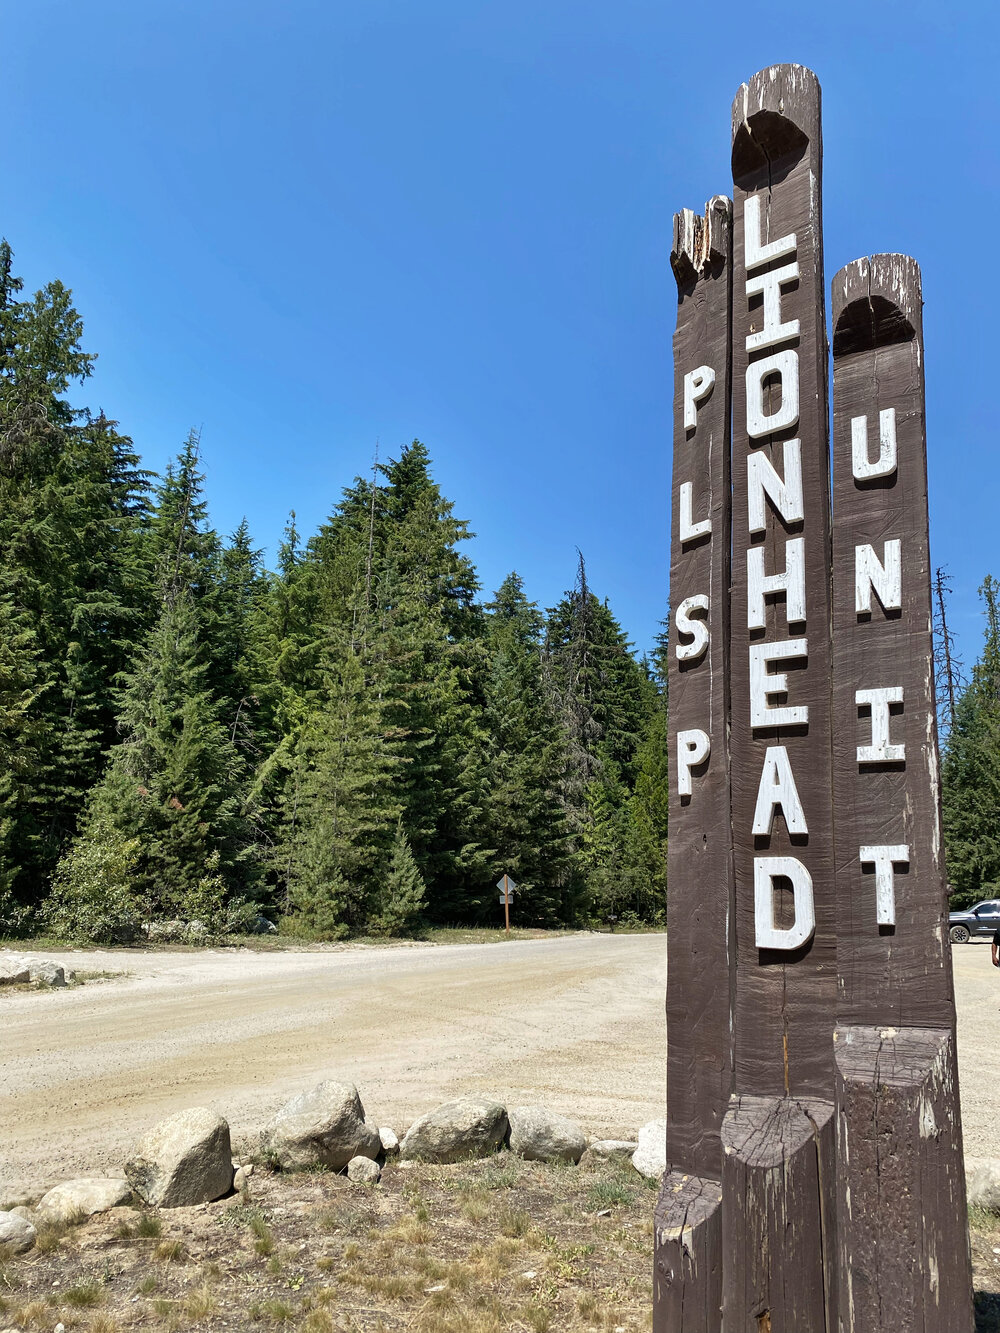 Lionhead Unit campground Priest Lake State Park North Idaho